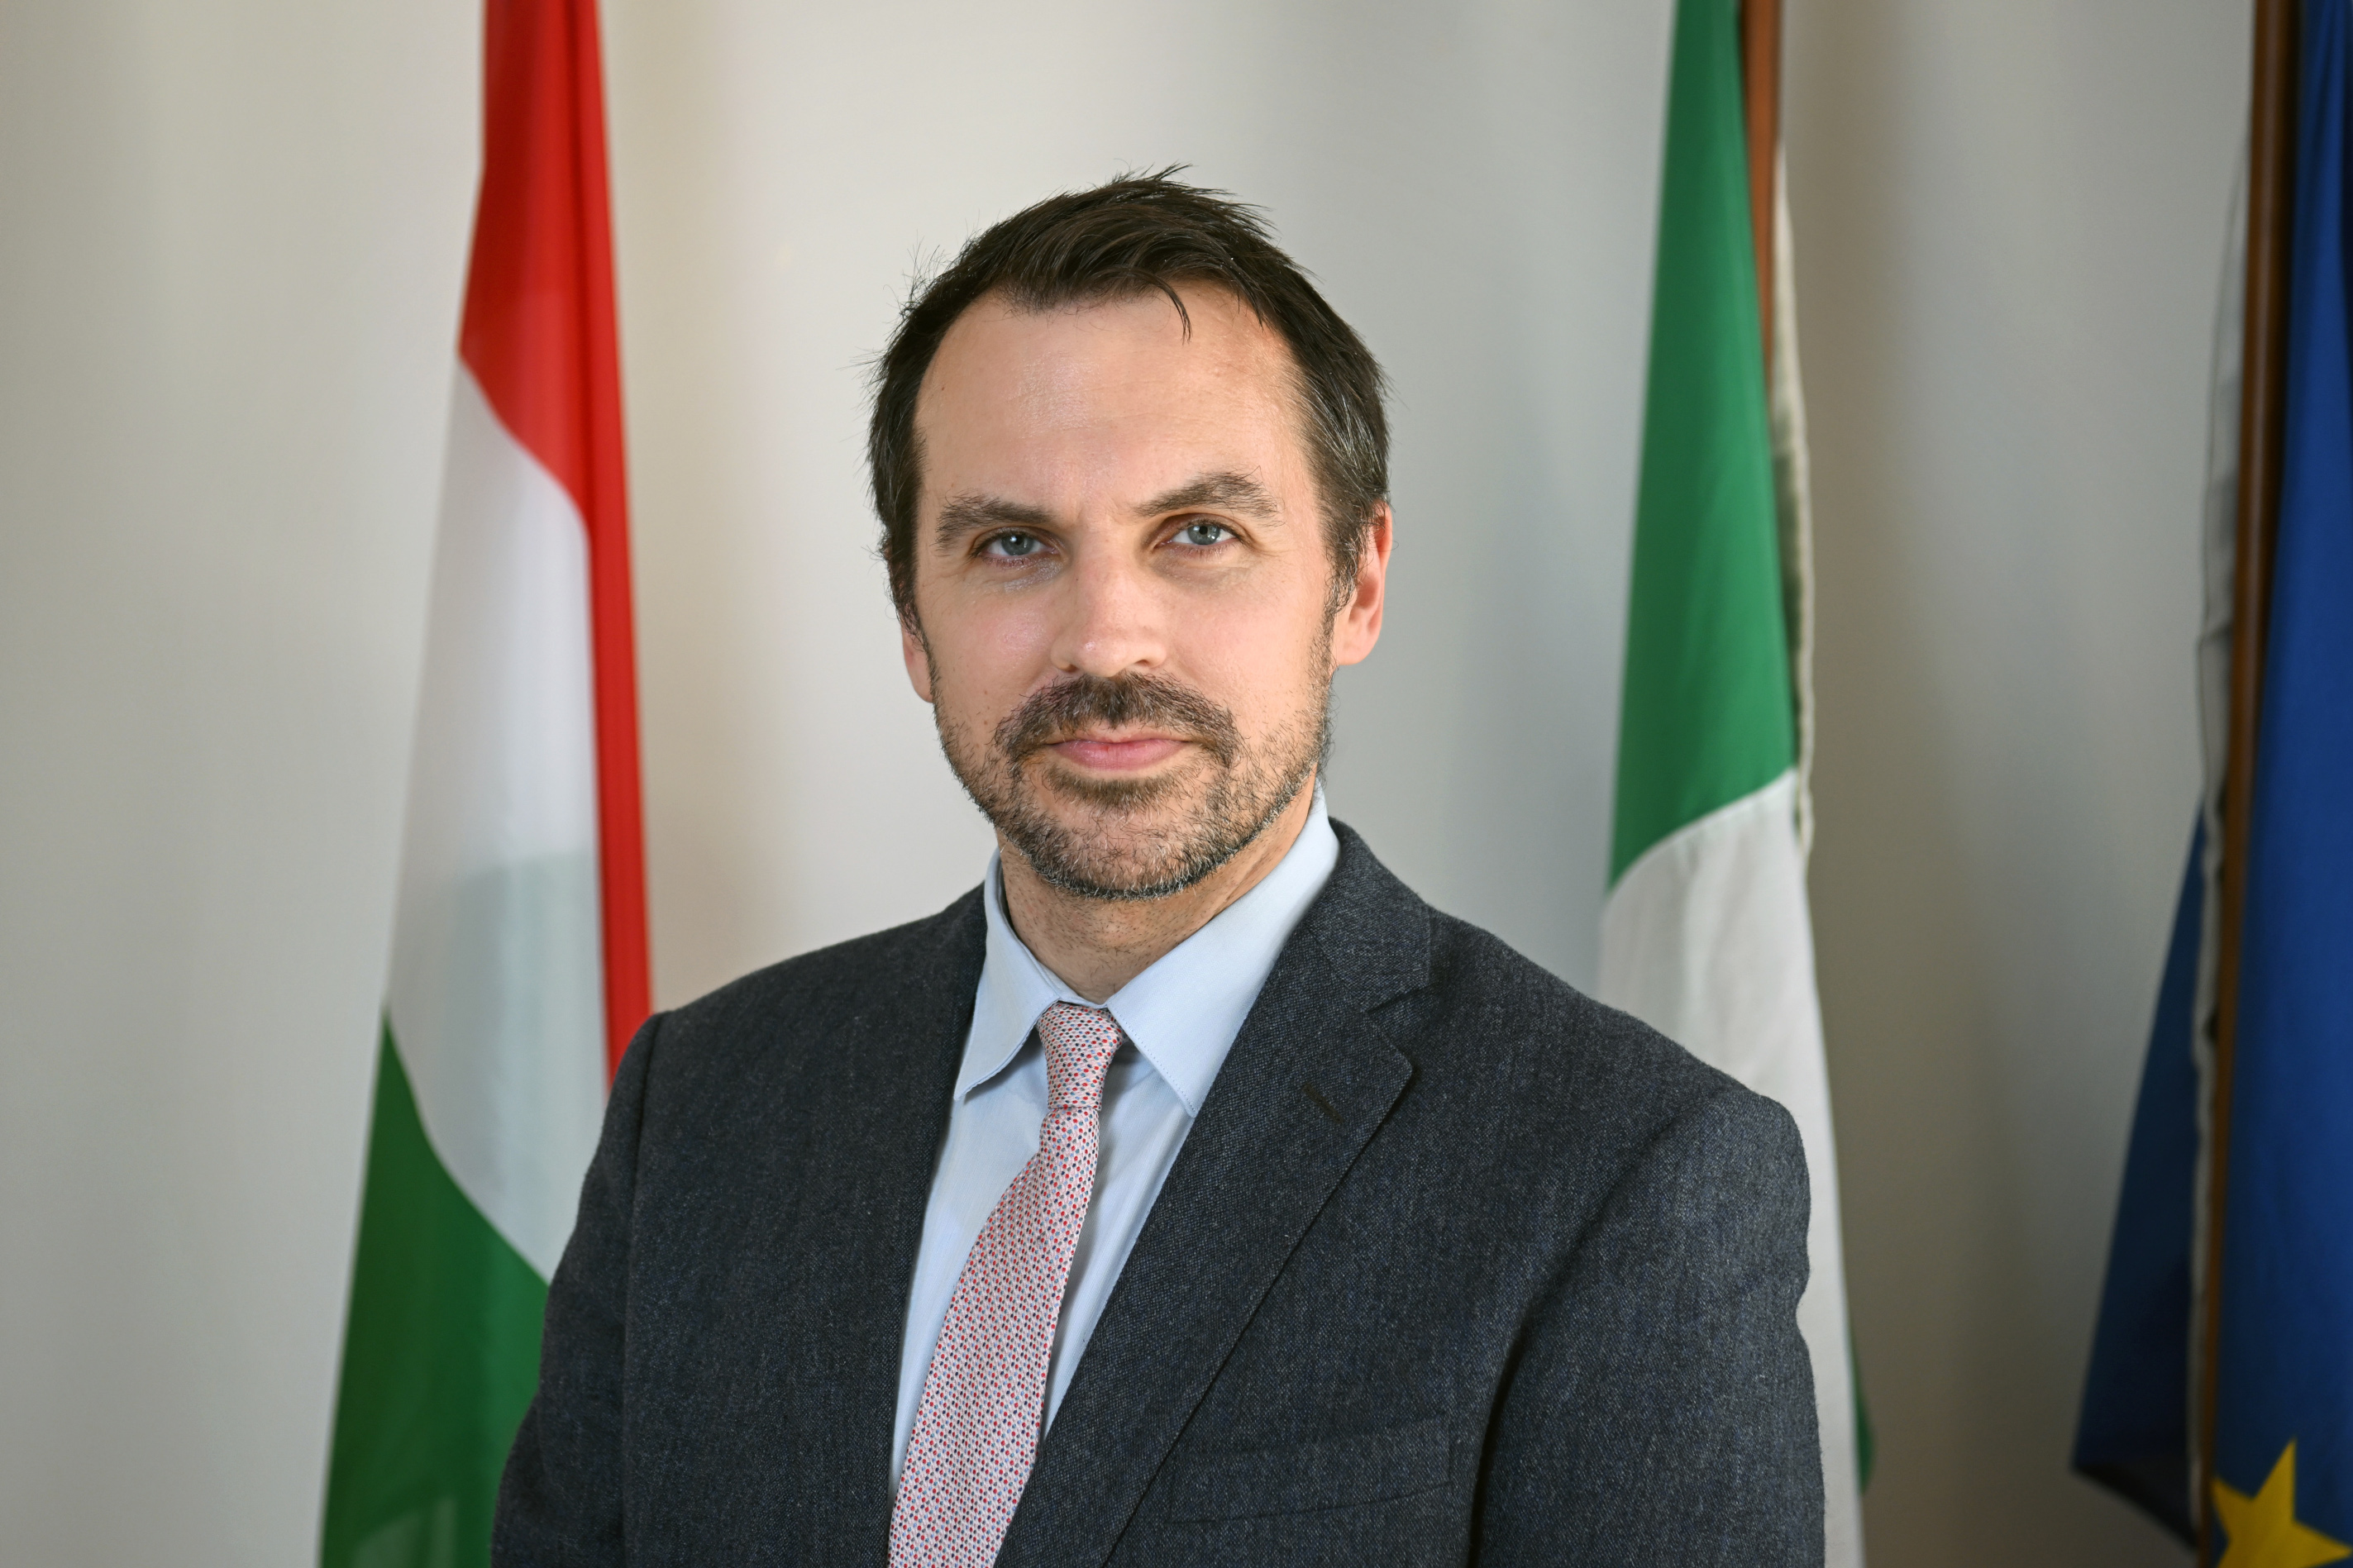 Ragnar Almqvist Irish Ambassador to Hungary